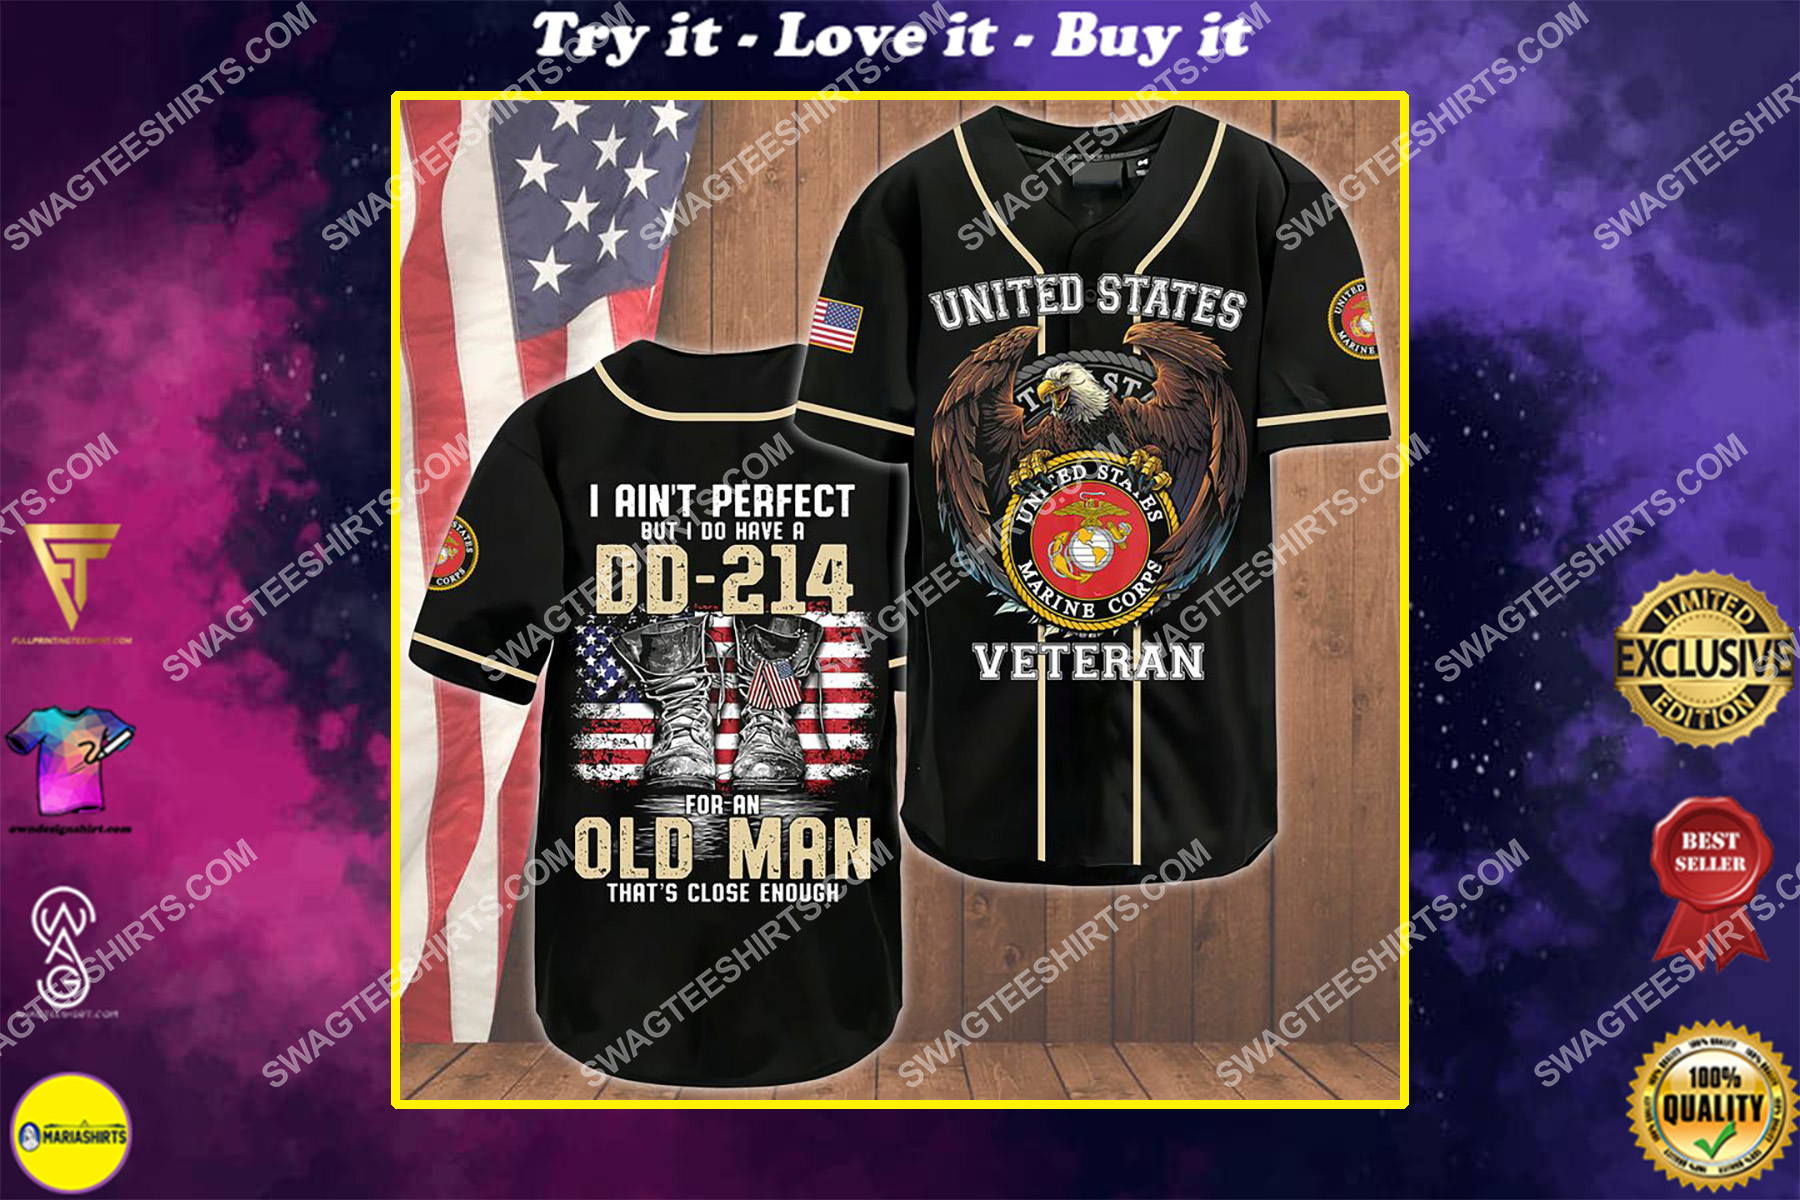 i ain't pperfect but i do have a dd-214 for an old man that's close enough marines veteran baseball shirt